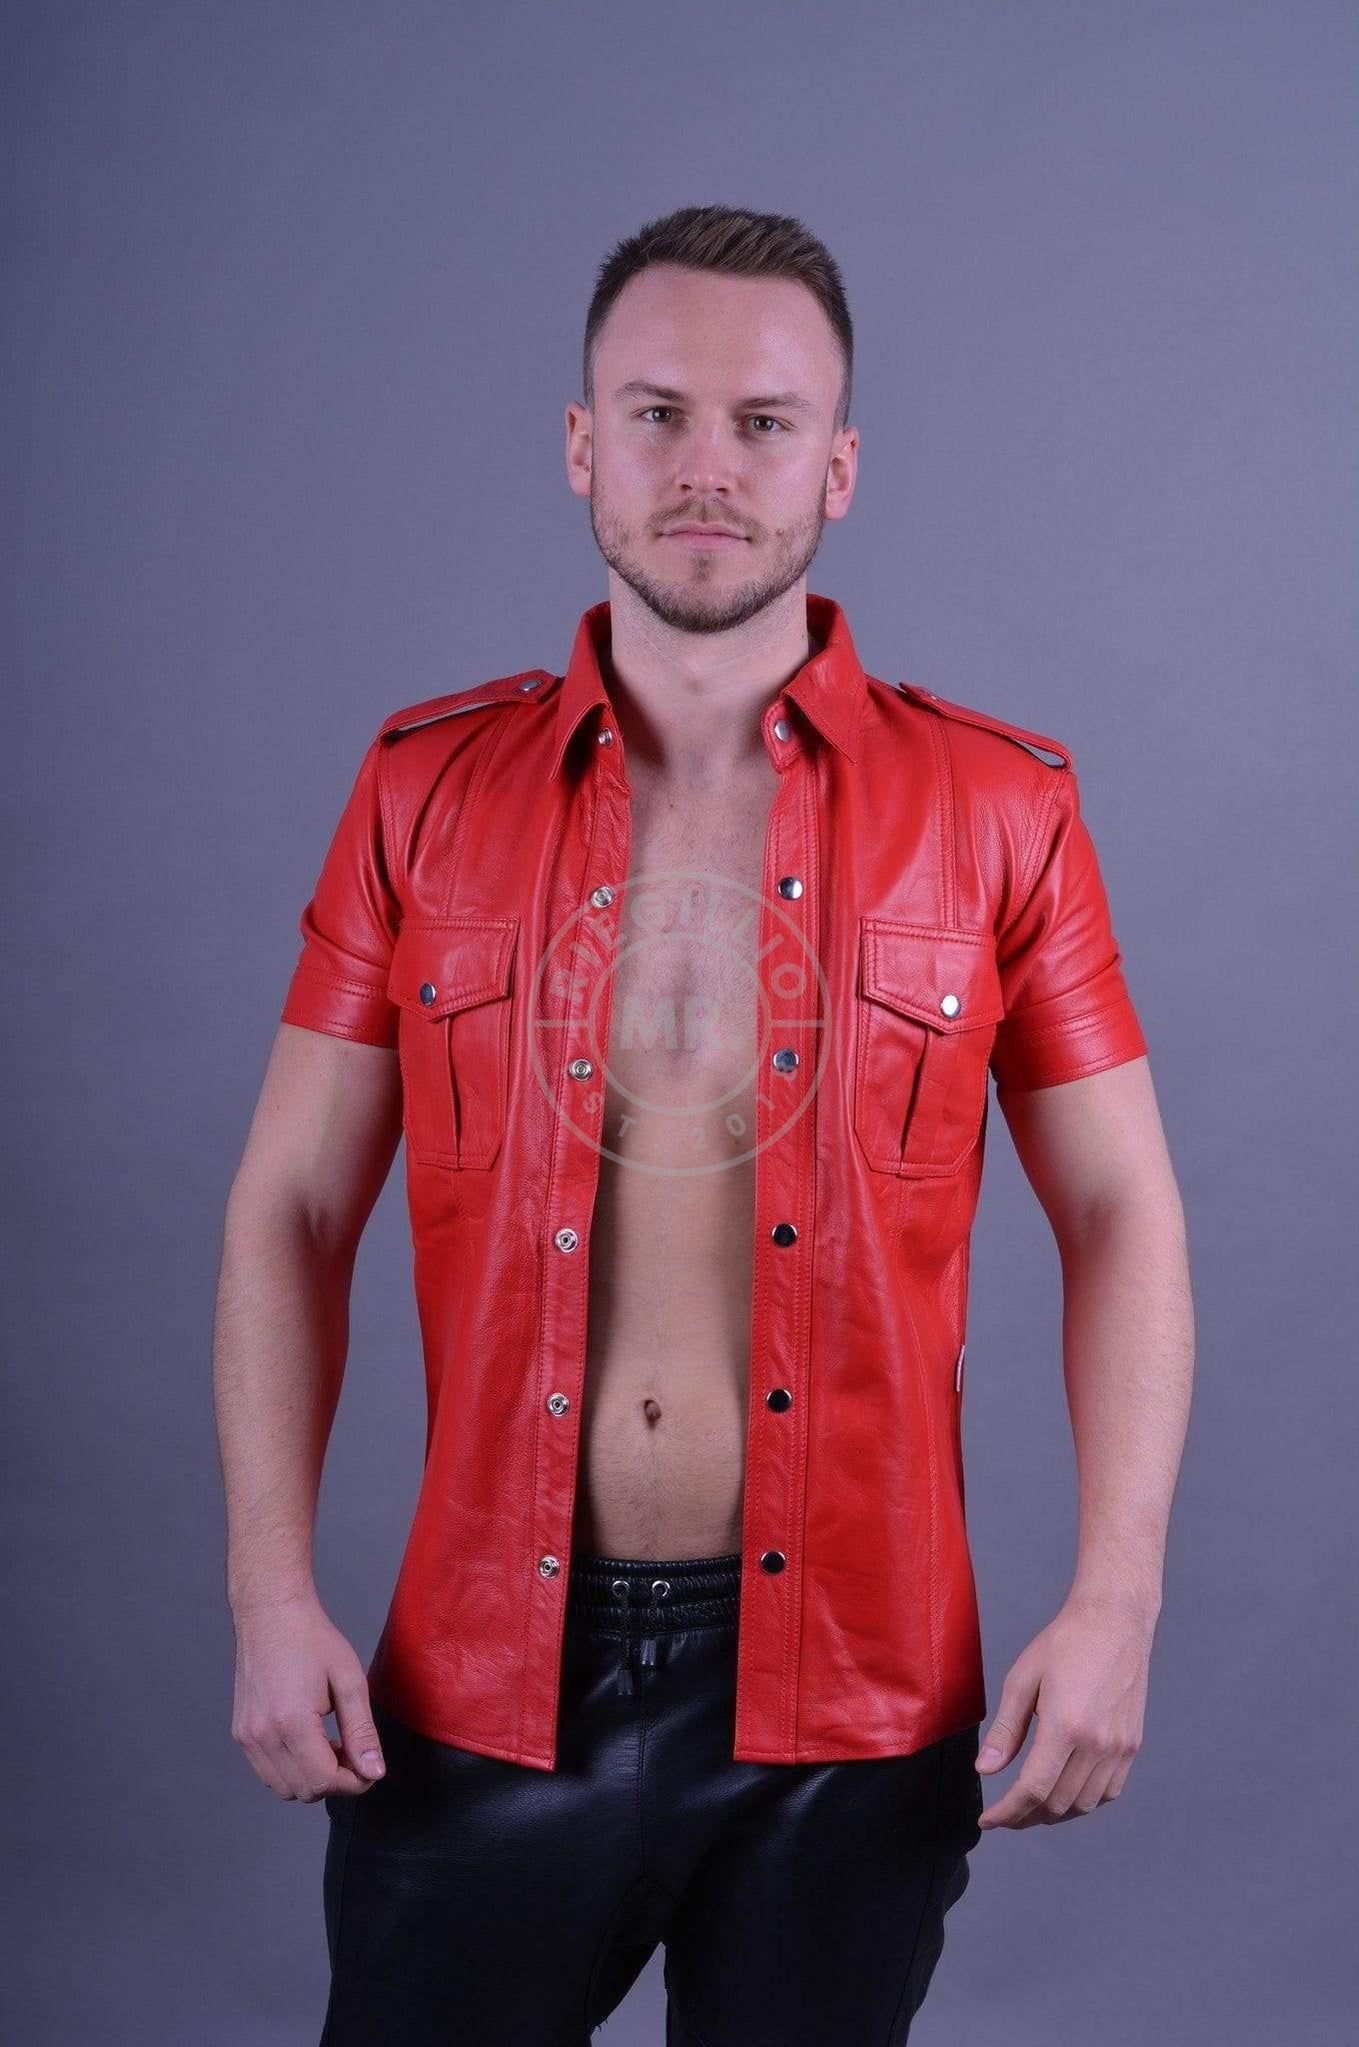 Red Leather Shirt at MR. Riegillio